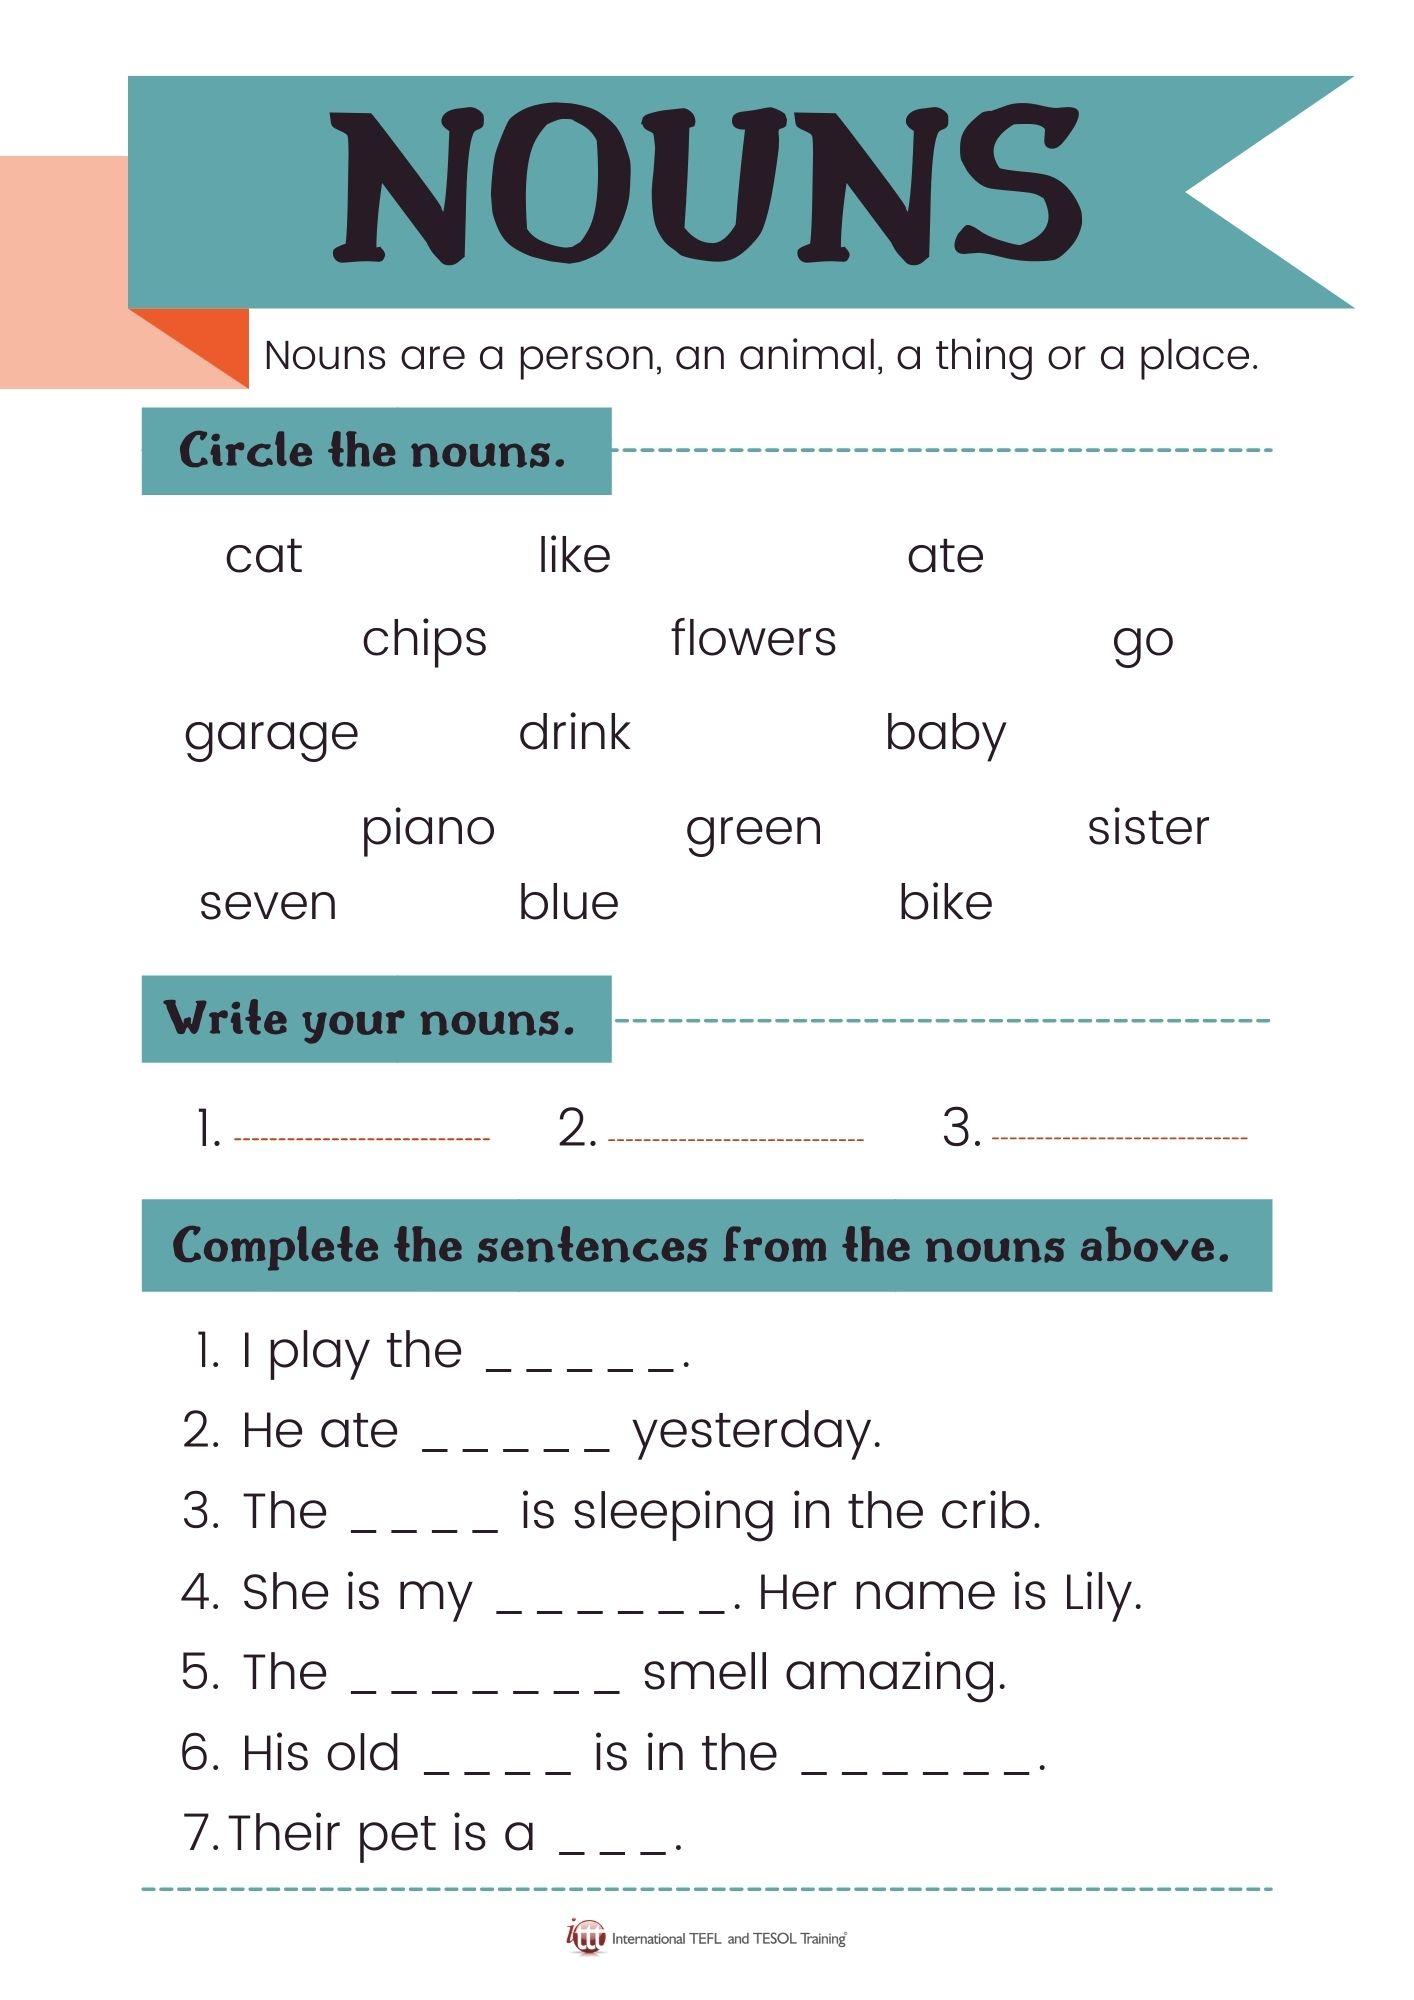 Grammar corner EFL Worksheet NOUNS